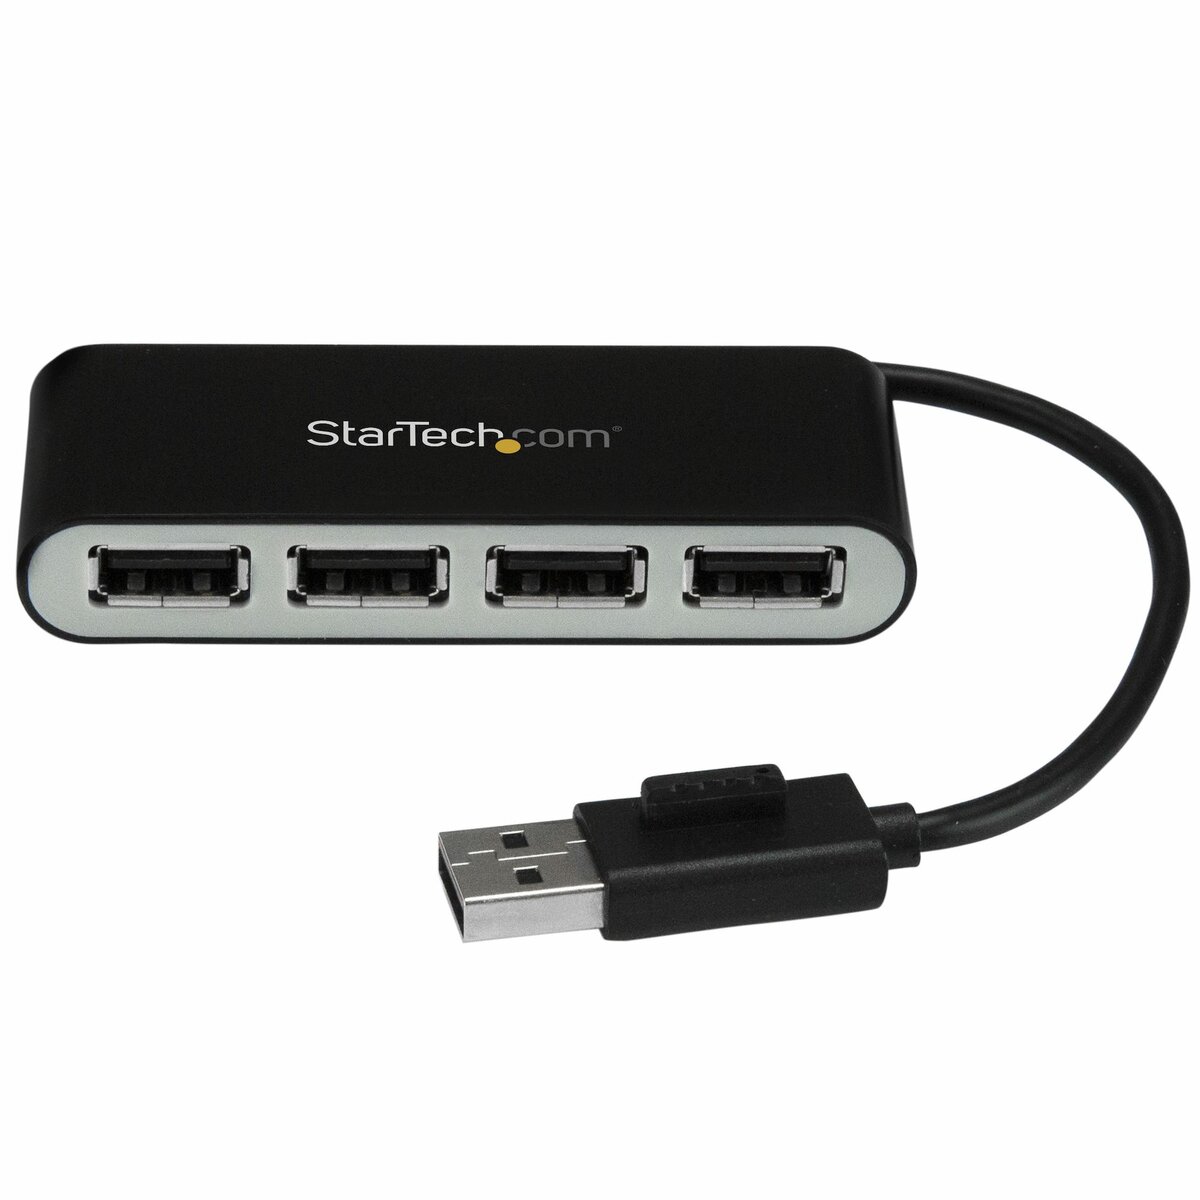 Smadre sejr fire 4-port StarTech.com 4 Port USB 2.0 Hub - USB Bus Powered - Portable Multi Port  USB 2.0 Splitter and Expander Hub - Sm... | Dell USA